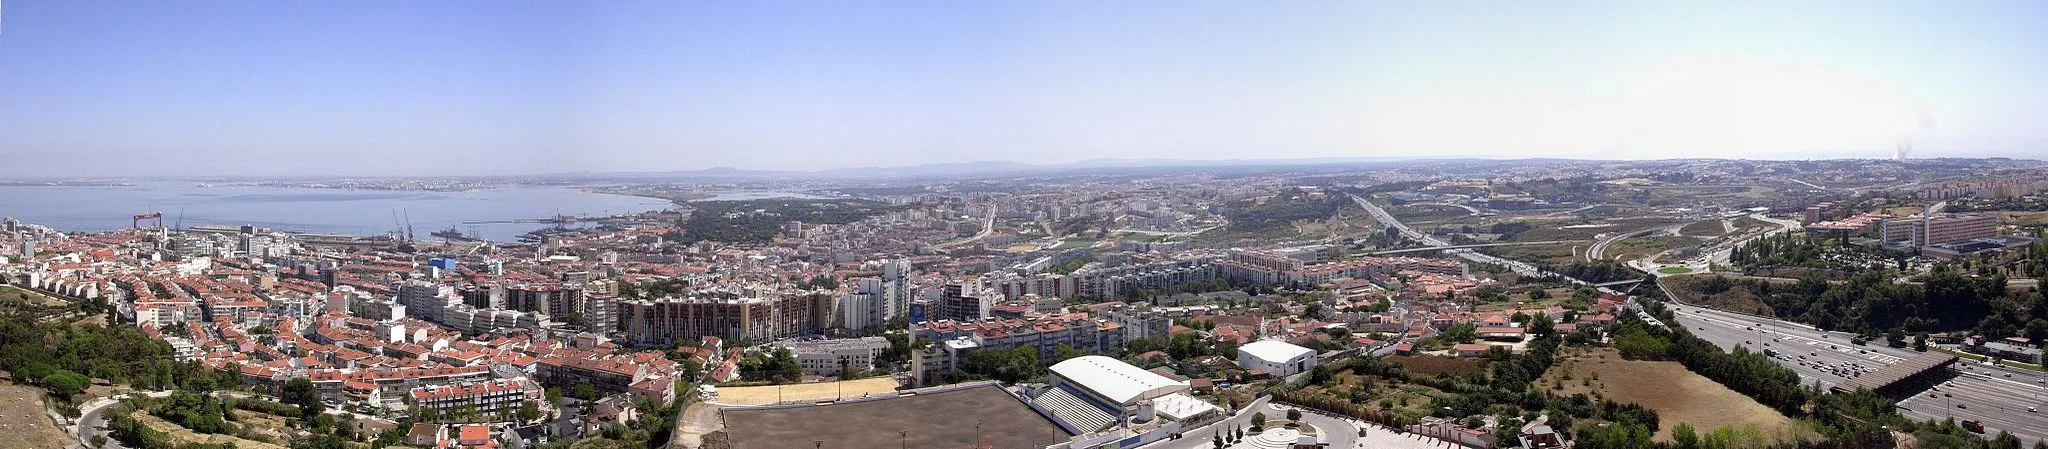 Image of Área Metropolitana de Lisboa